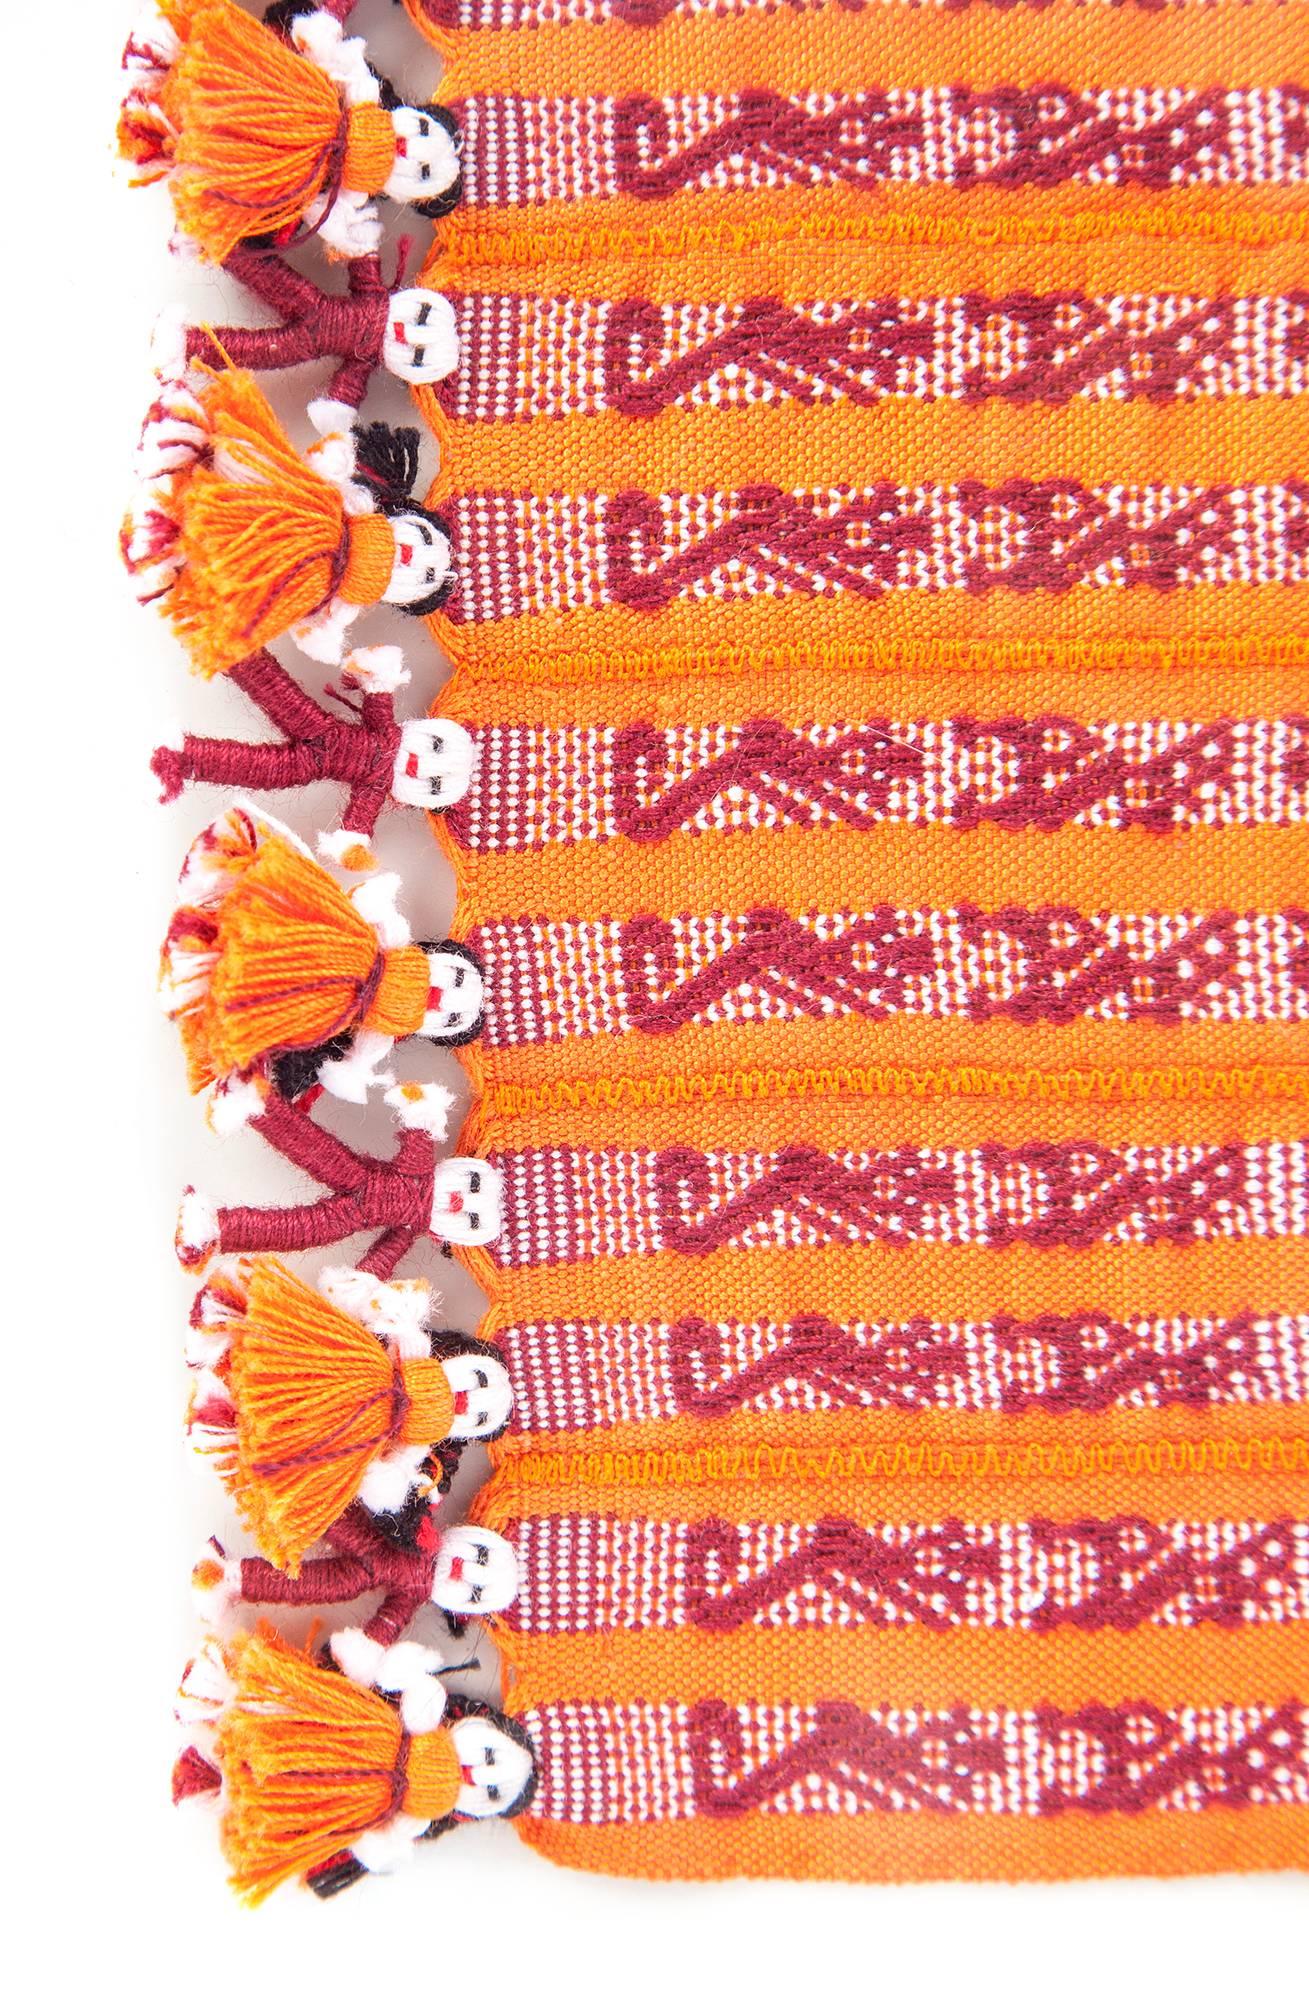 Tapete Miniatura Naranja y Rojo / Textiles Mexican Folk Art Miniature Rug Frame 1